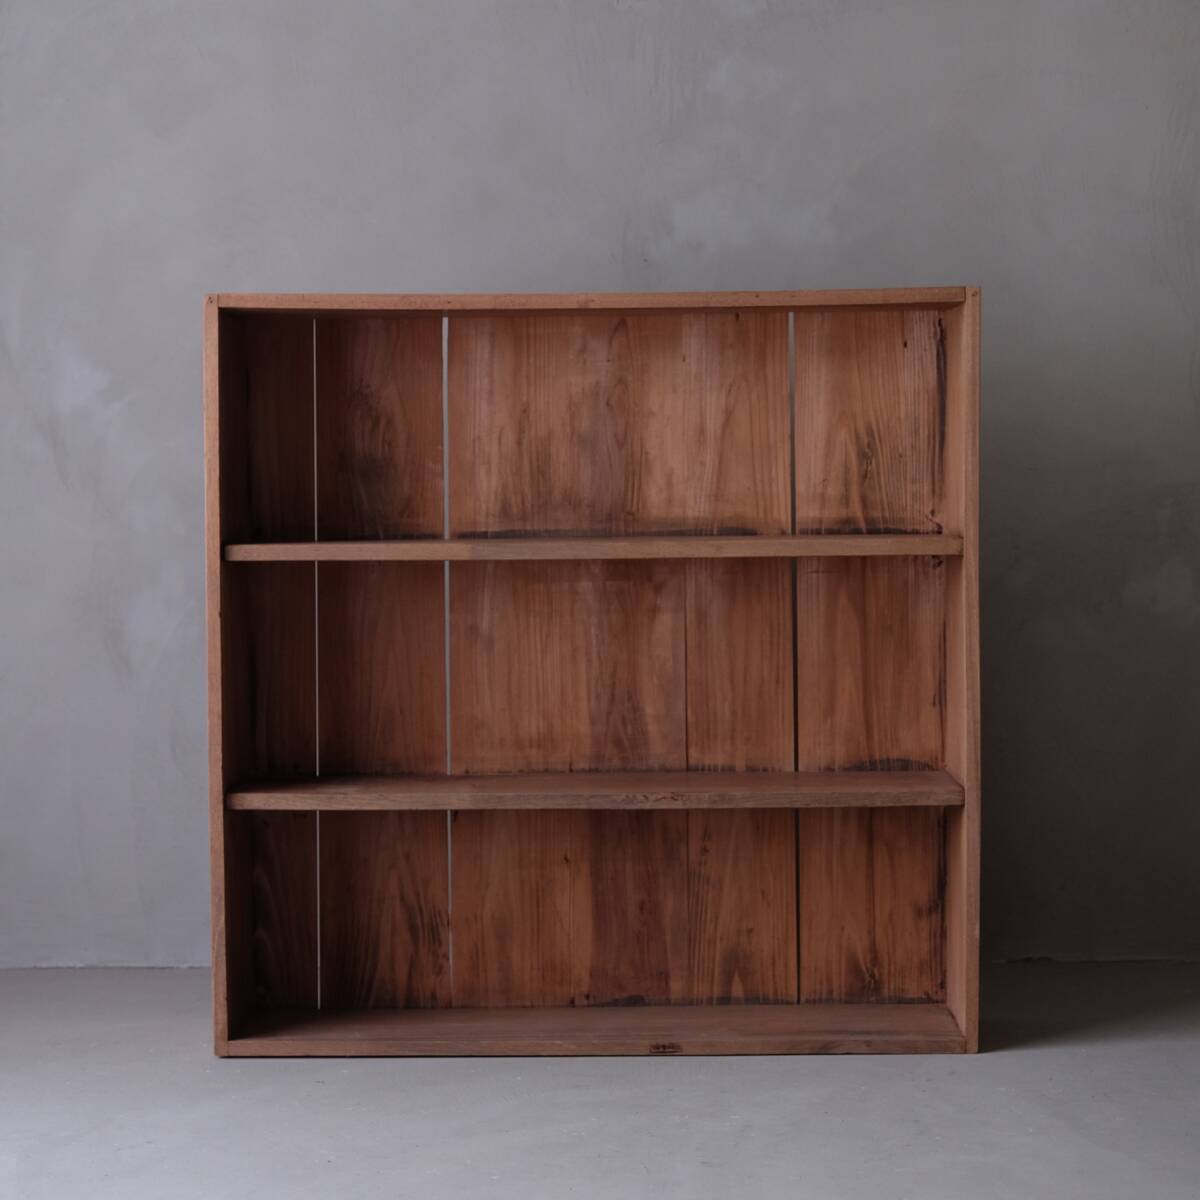 02983la one material 3 step bookcase / book shelf display case storage shelves old furniture antique retro 